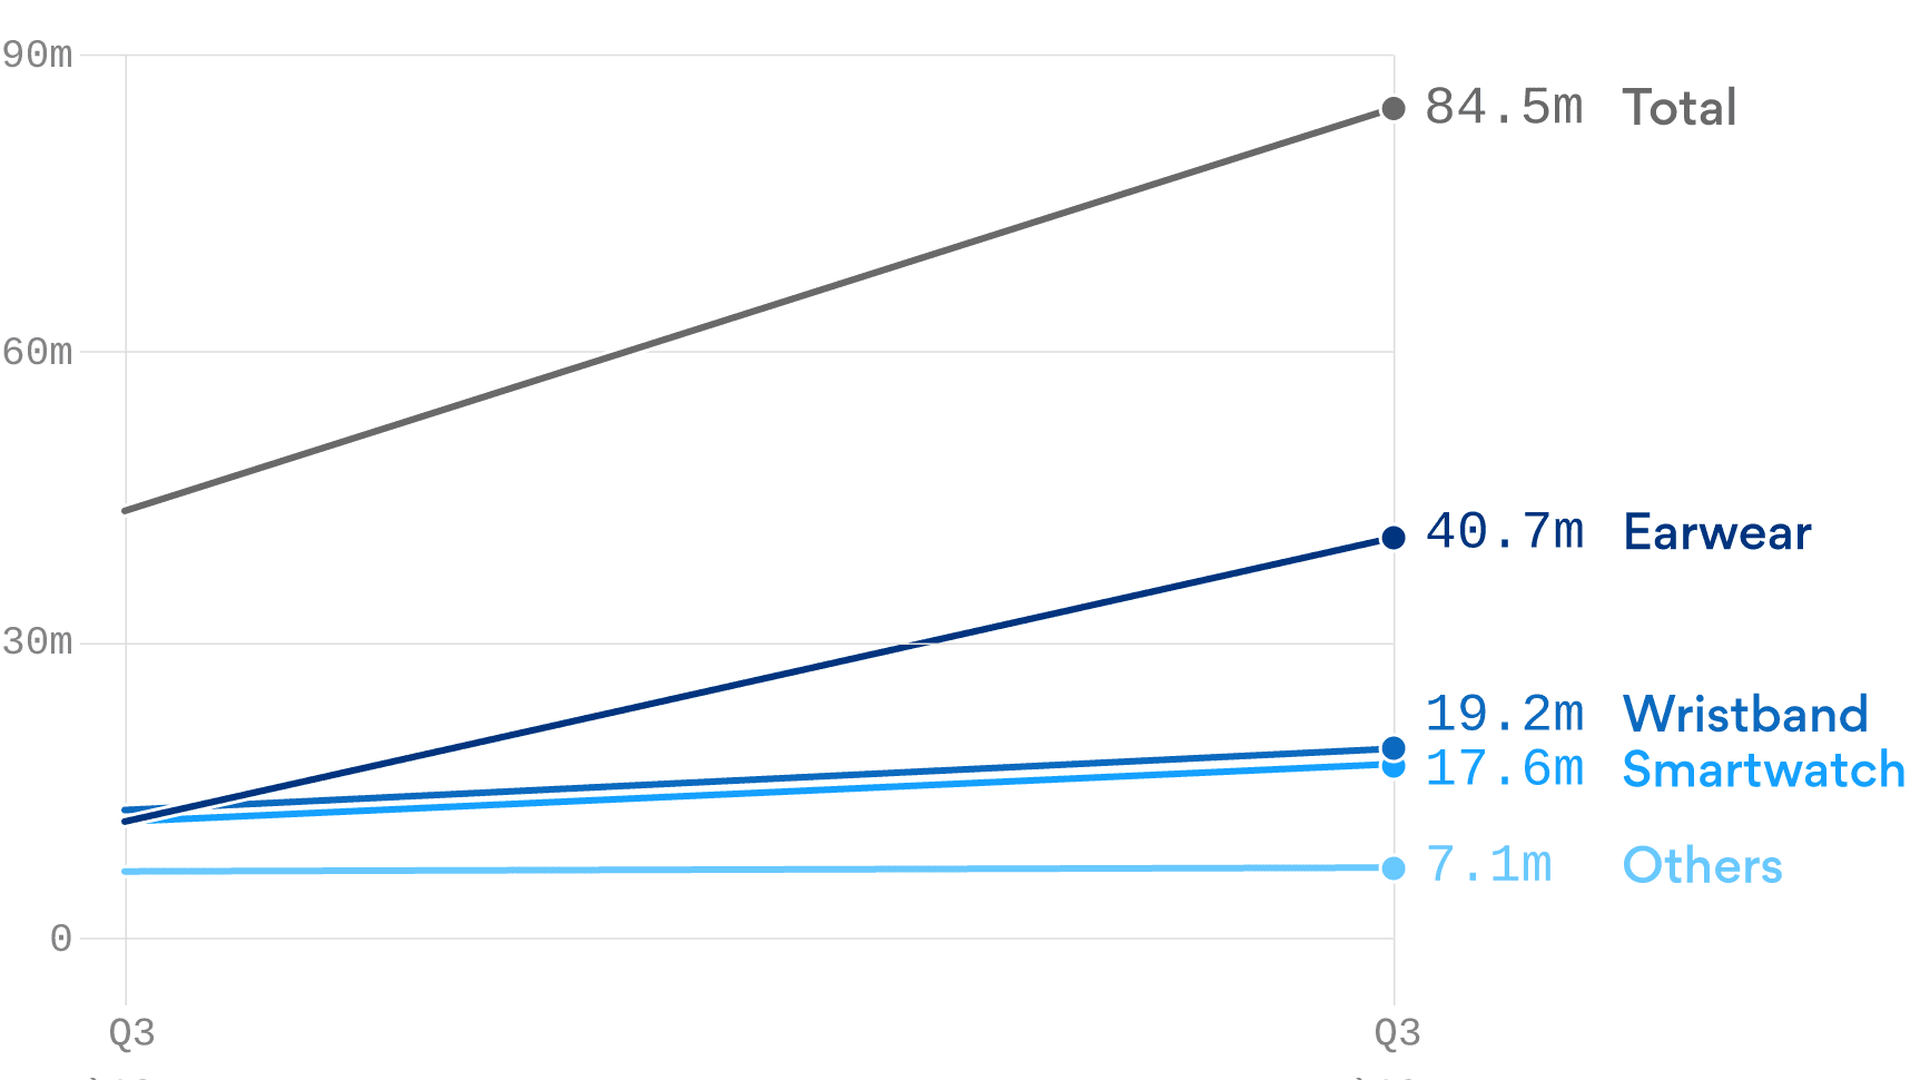 A chart showing an increase in wearable tech shipments.